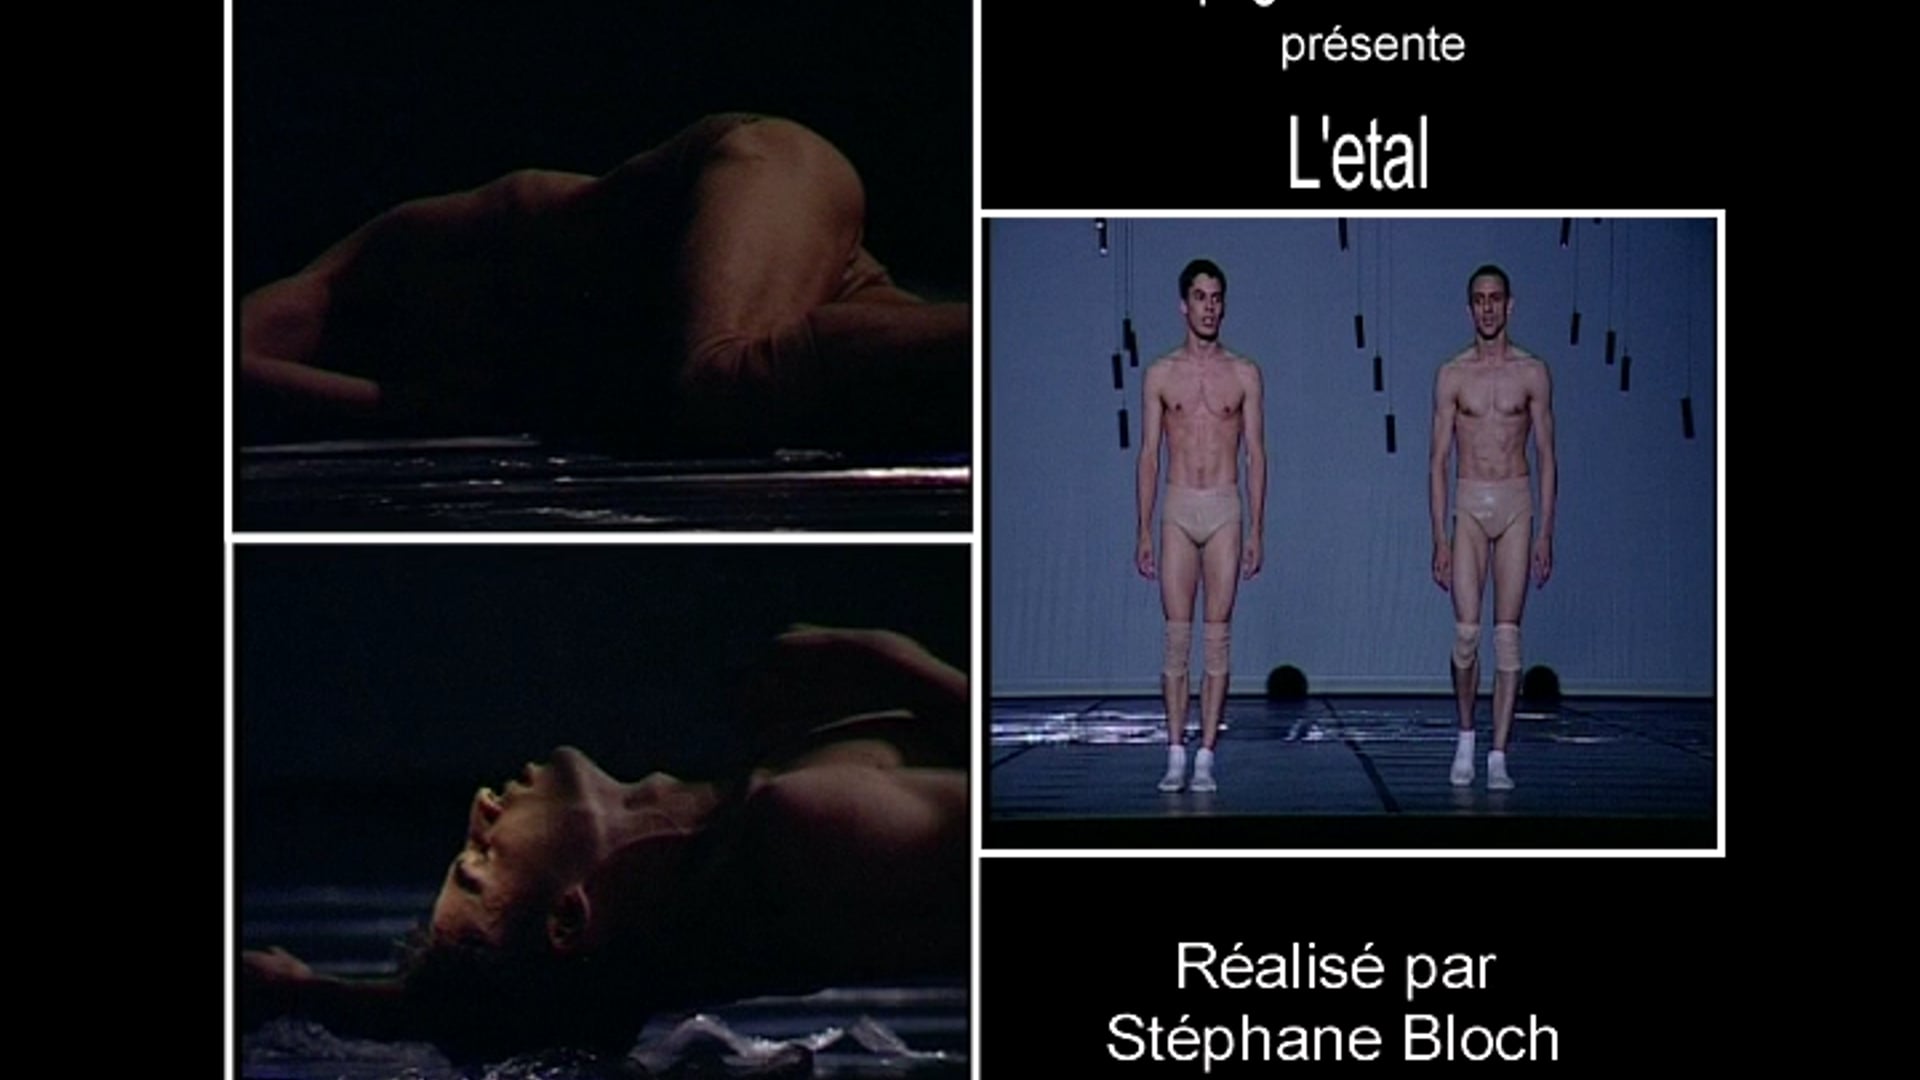 L'étal - Choreography by Pedro Pauwels - 2002